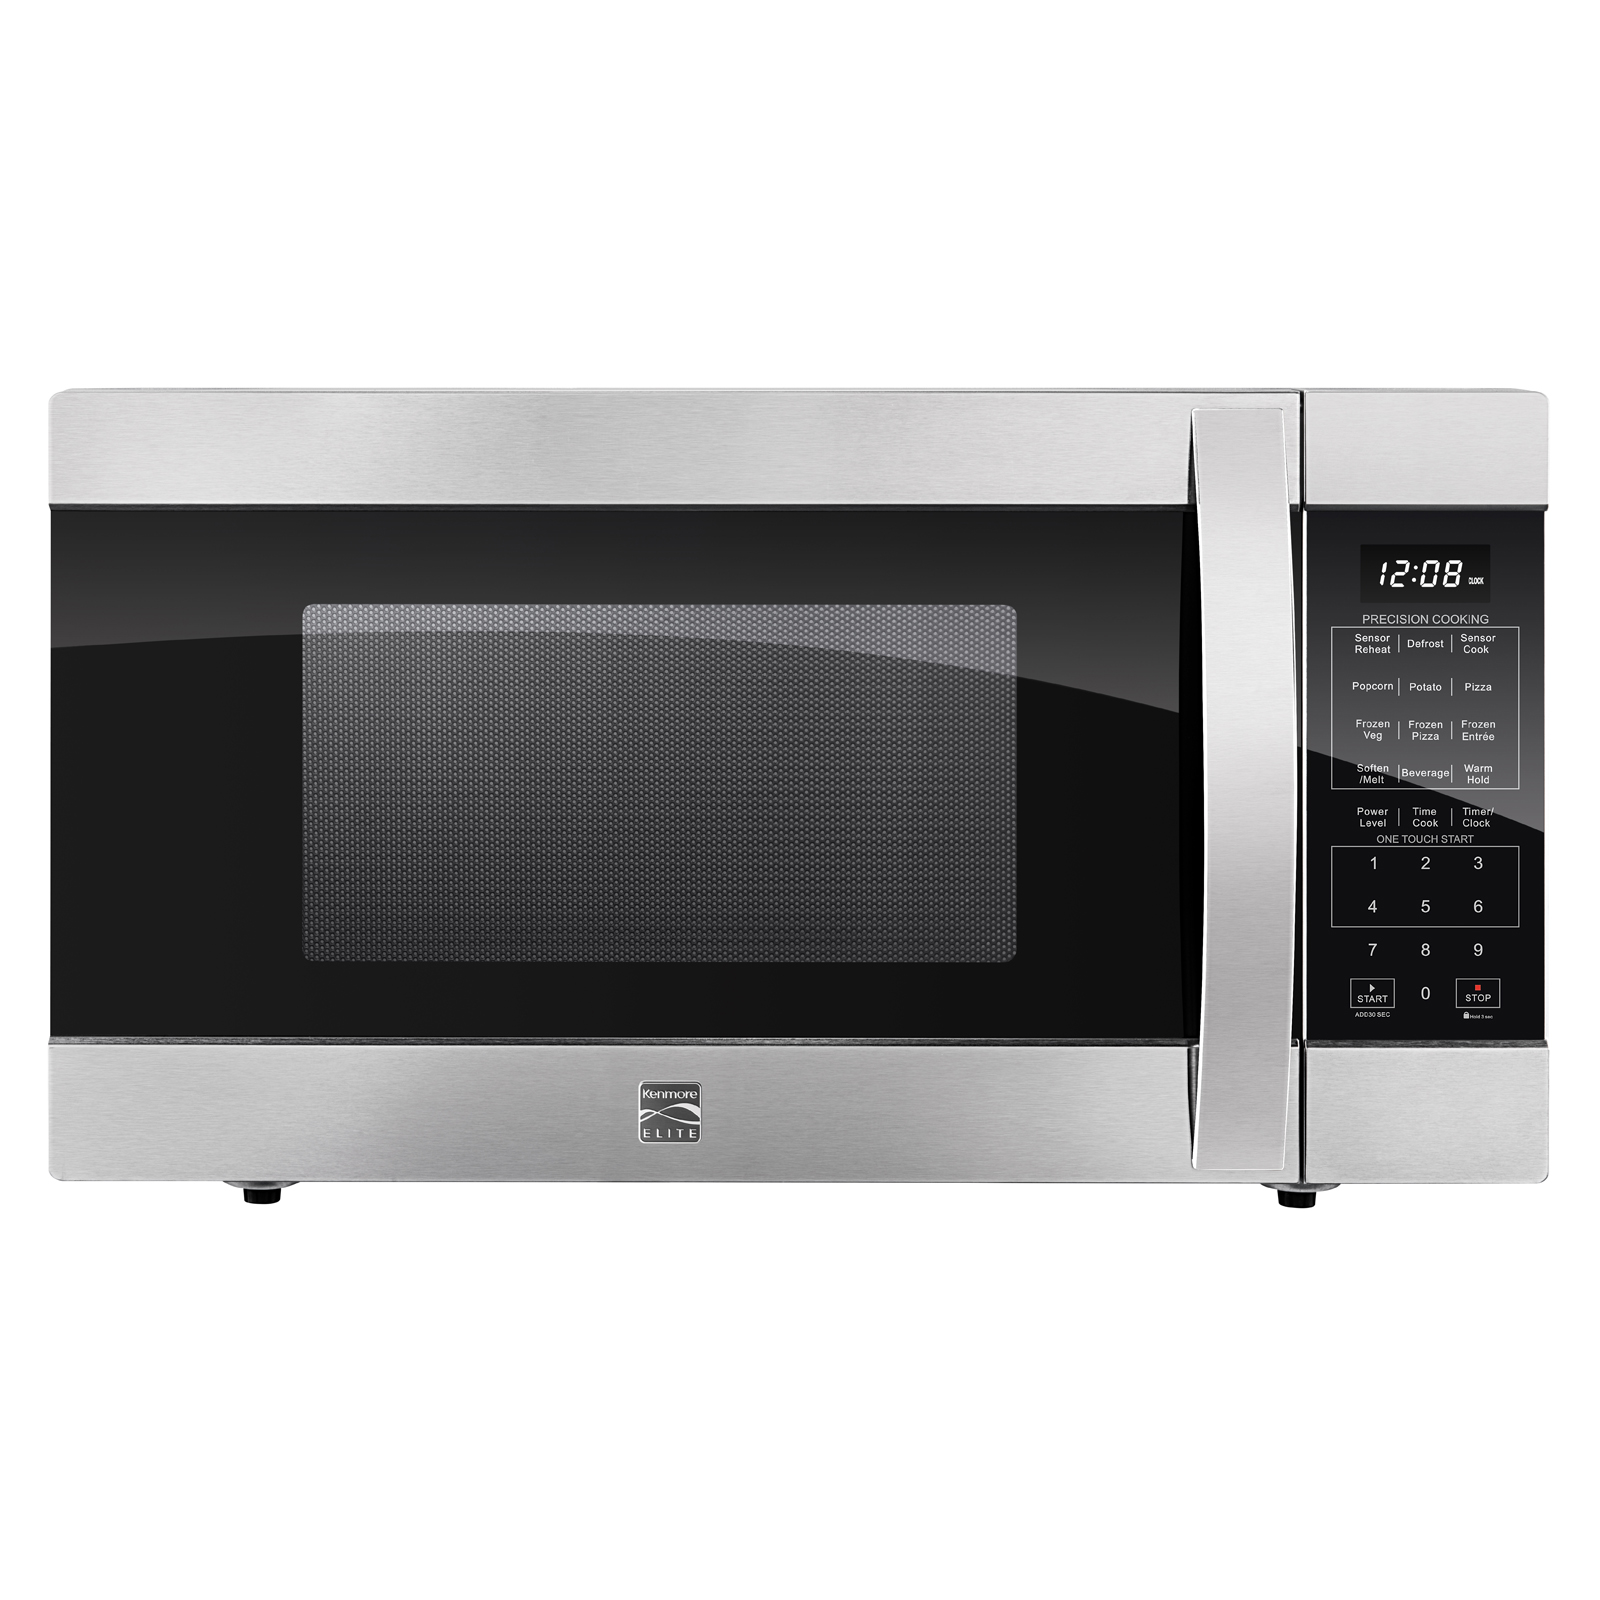 Kenmore Elite 79393 2.2 cu. ft. Countertop Microwave Oven with Inverter